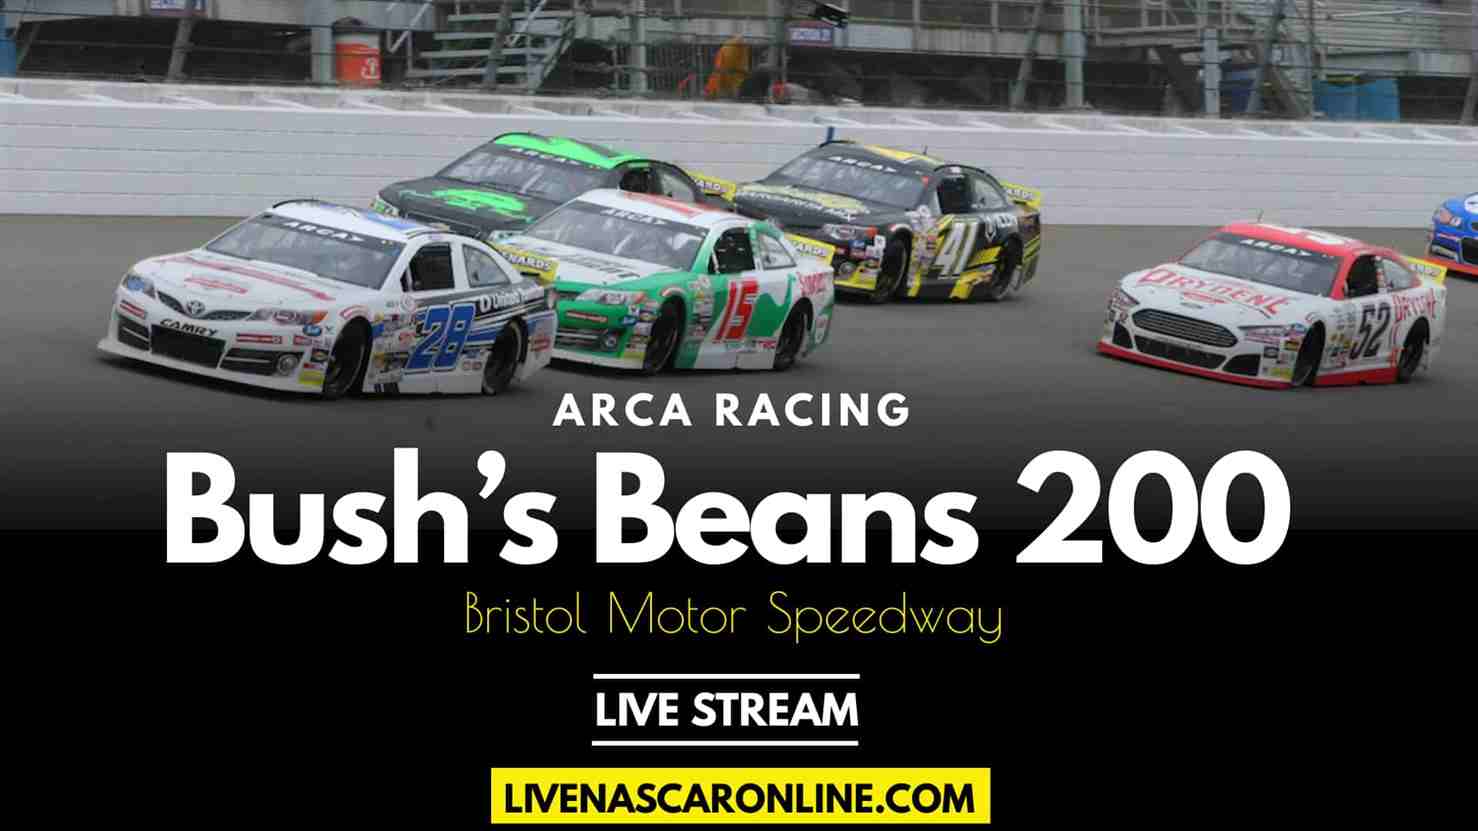 bushs-beans-200-arca-racing-live-stream